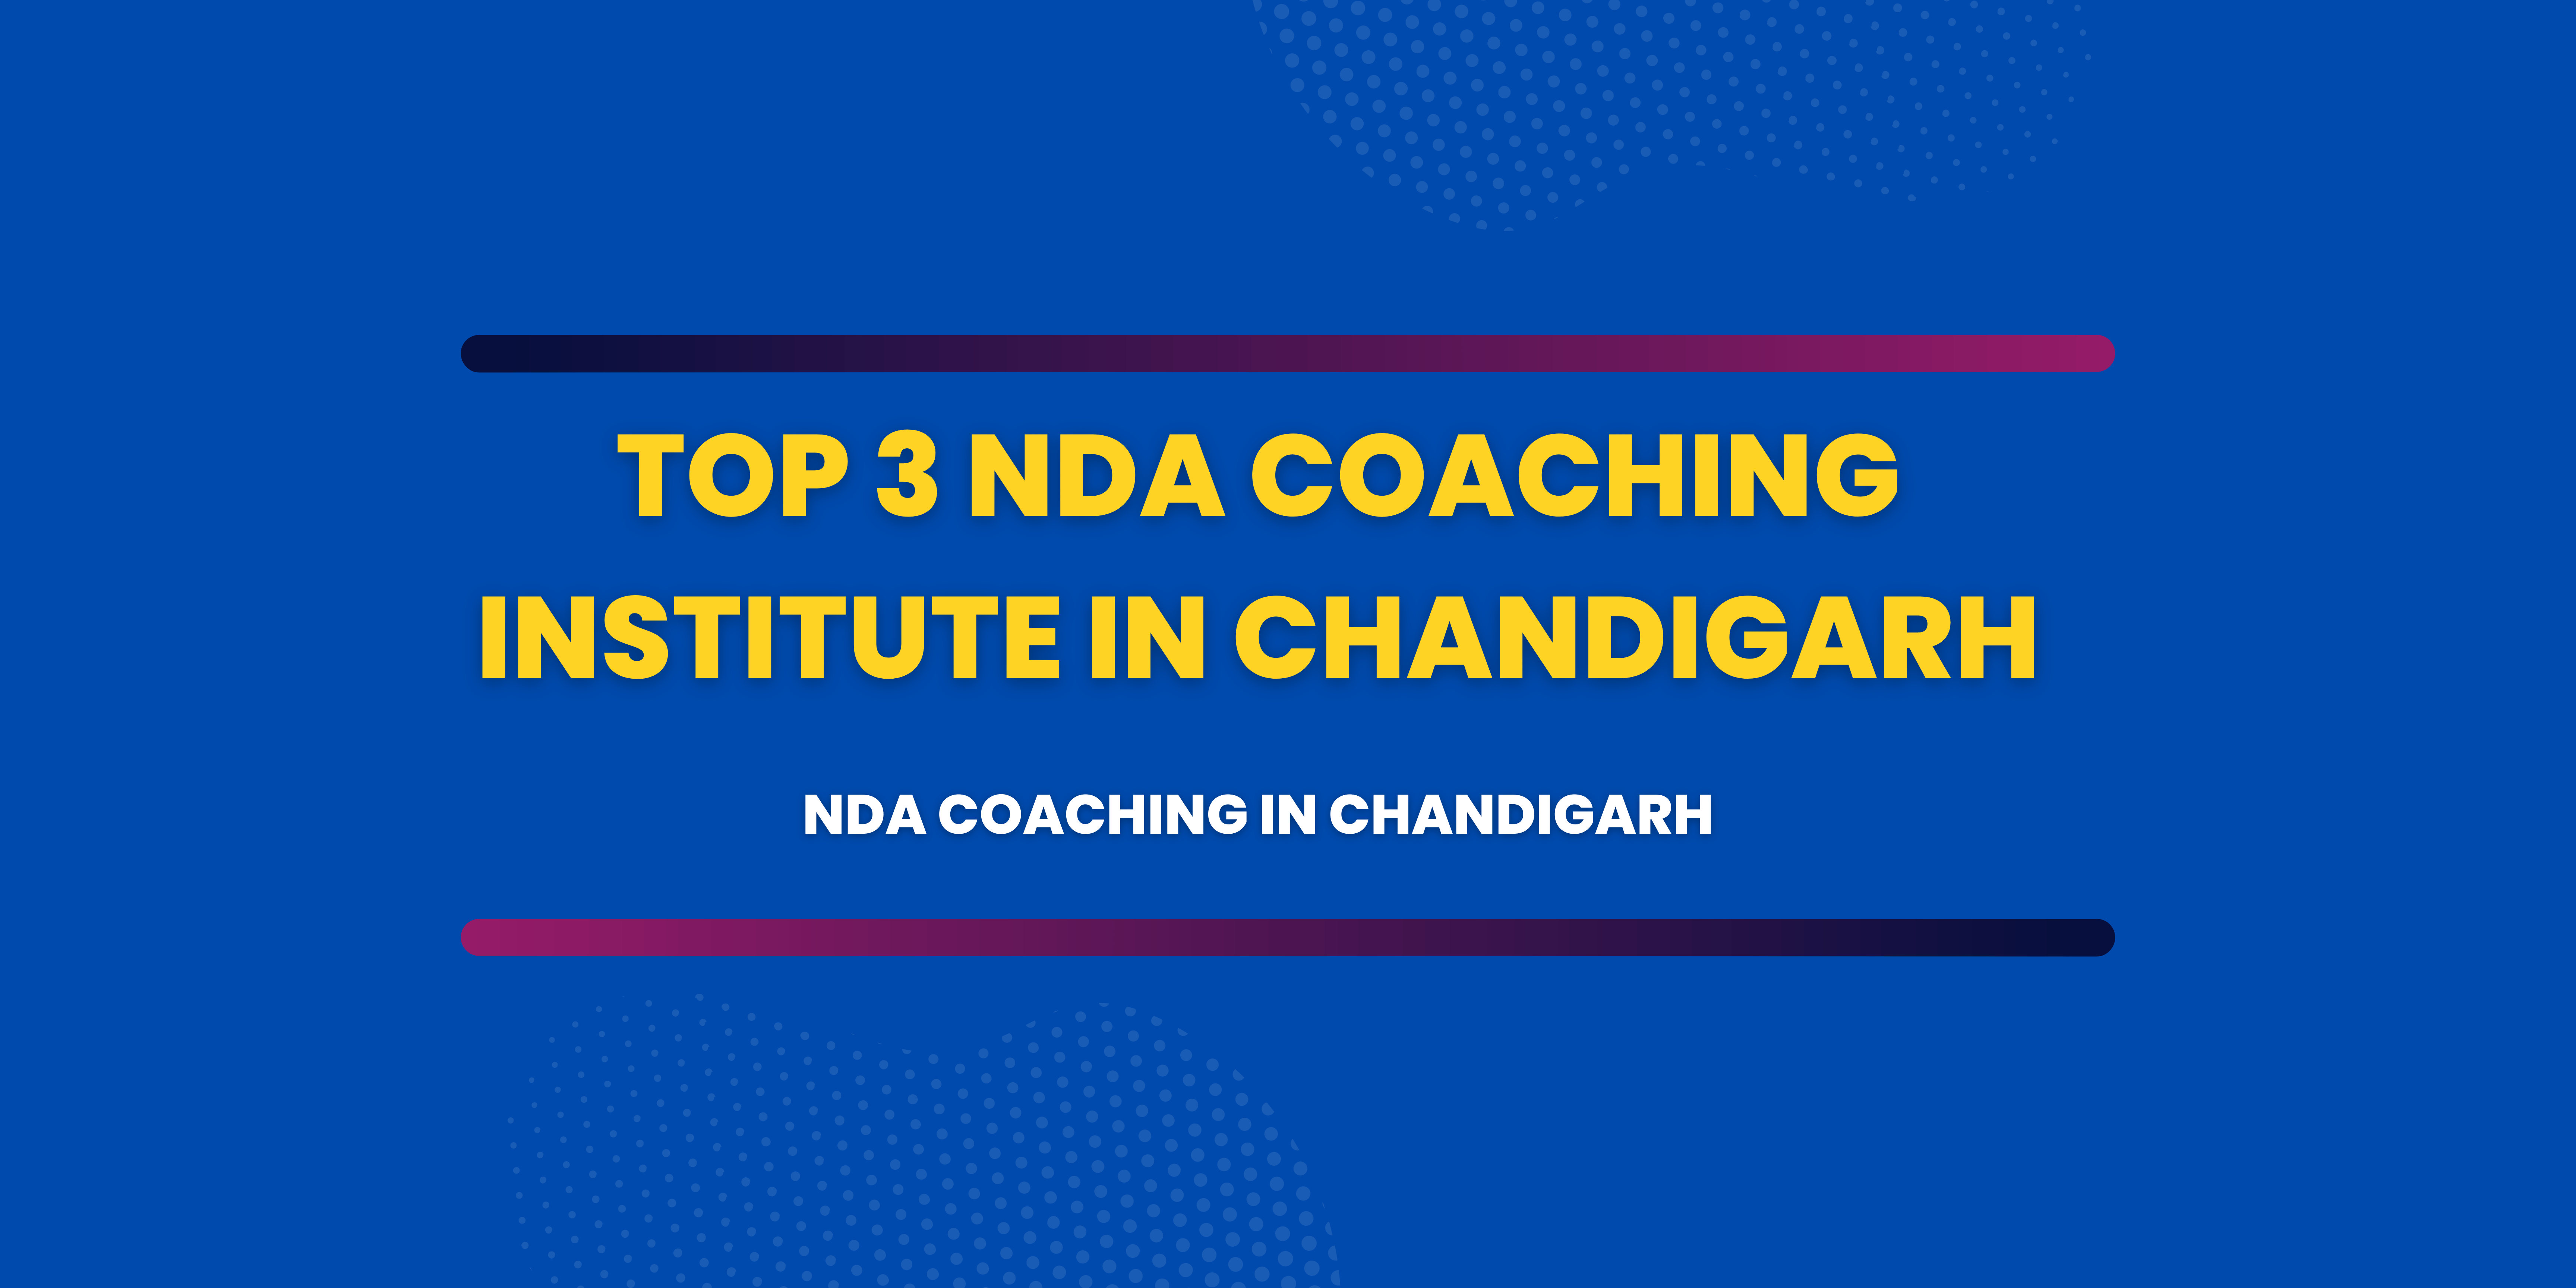 Top 3 NDA Coaching Institute in Chandigarh